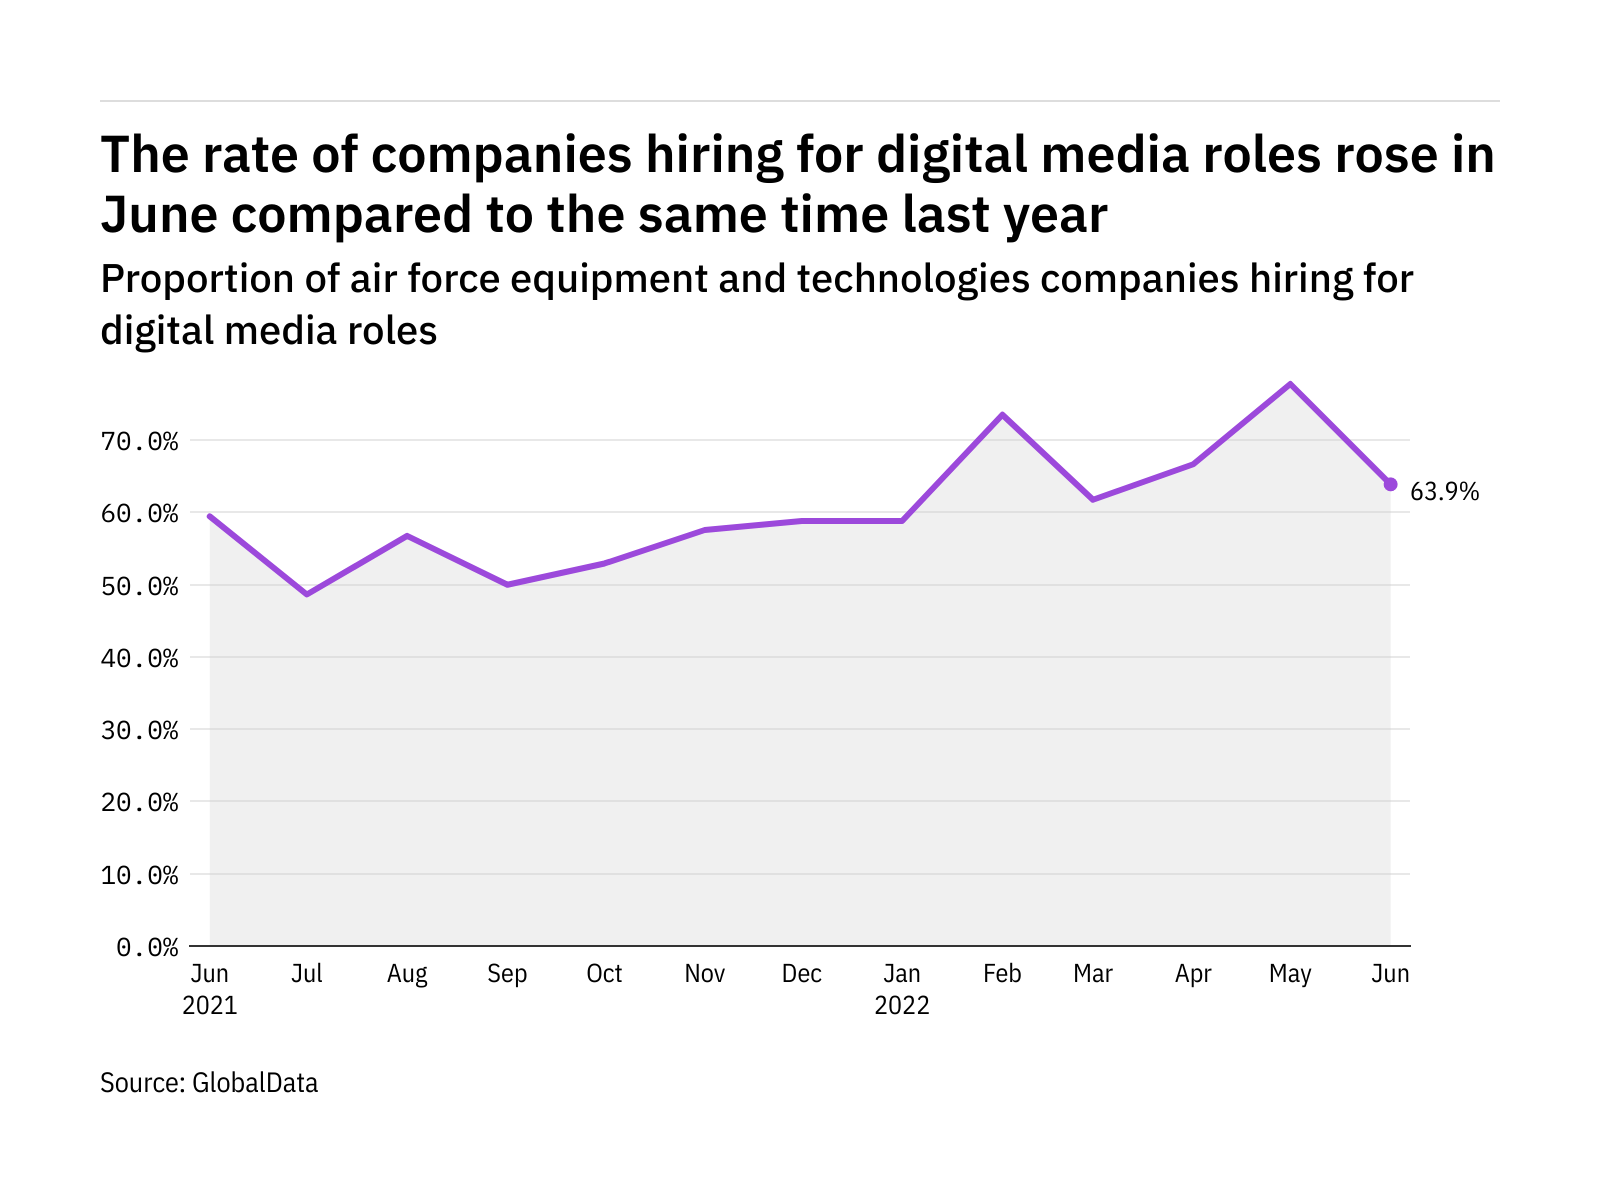 Digital media hiring levels in the air force industry rose in June 2022